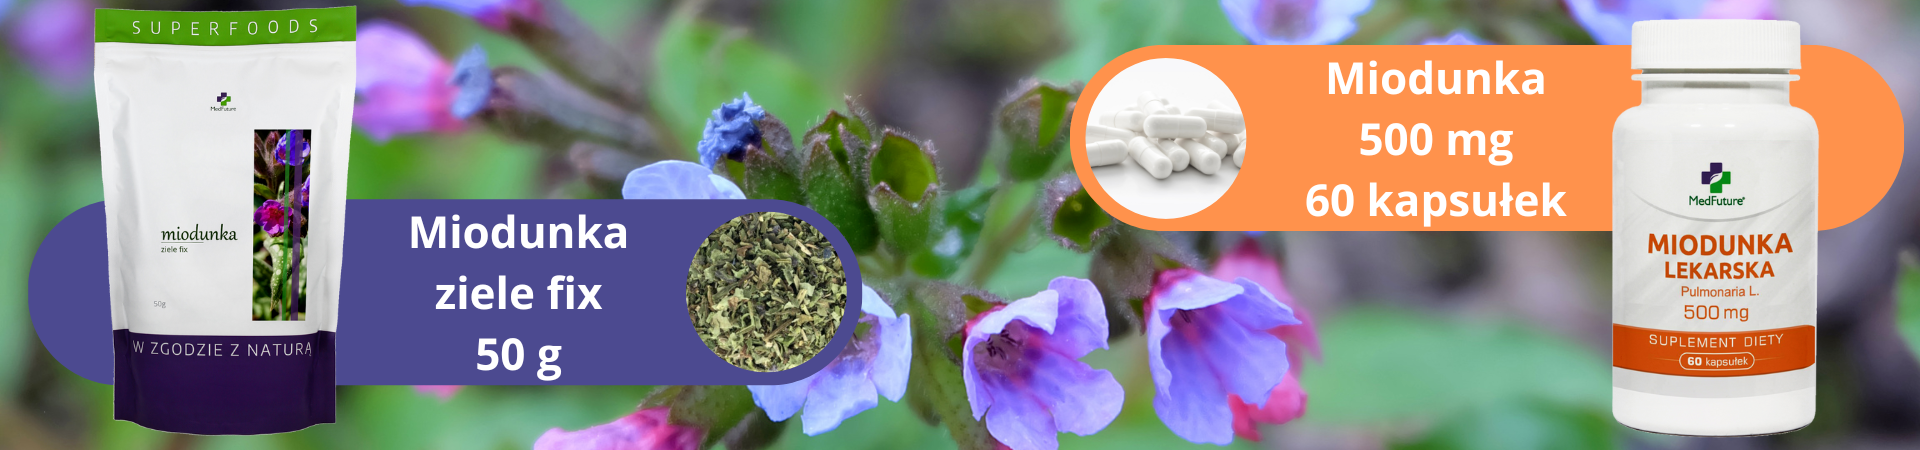 miodunka ziele fix i ekstrakt 500 mg